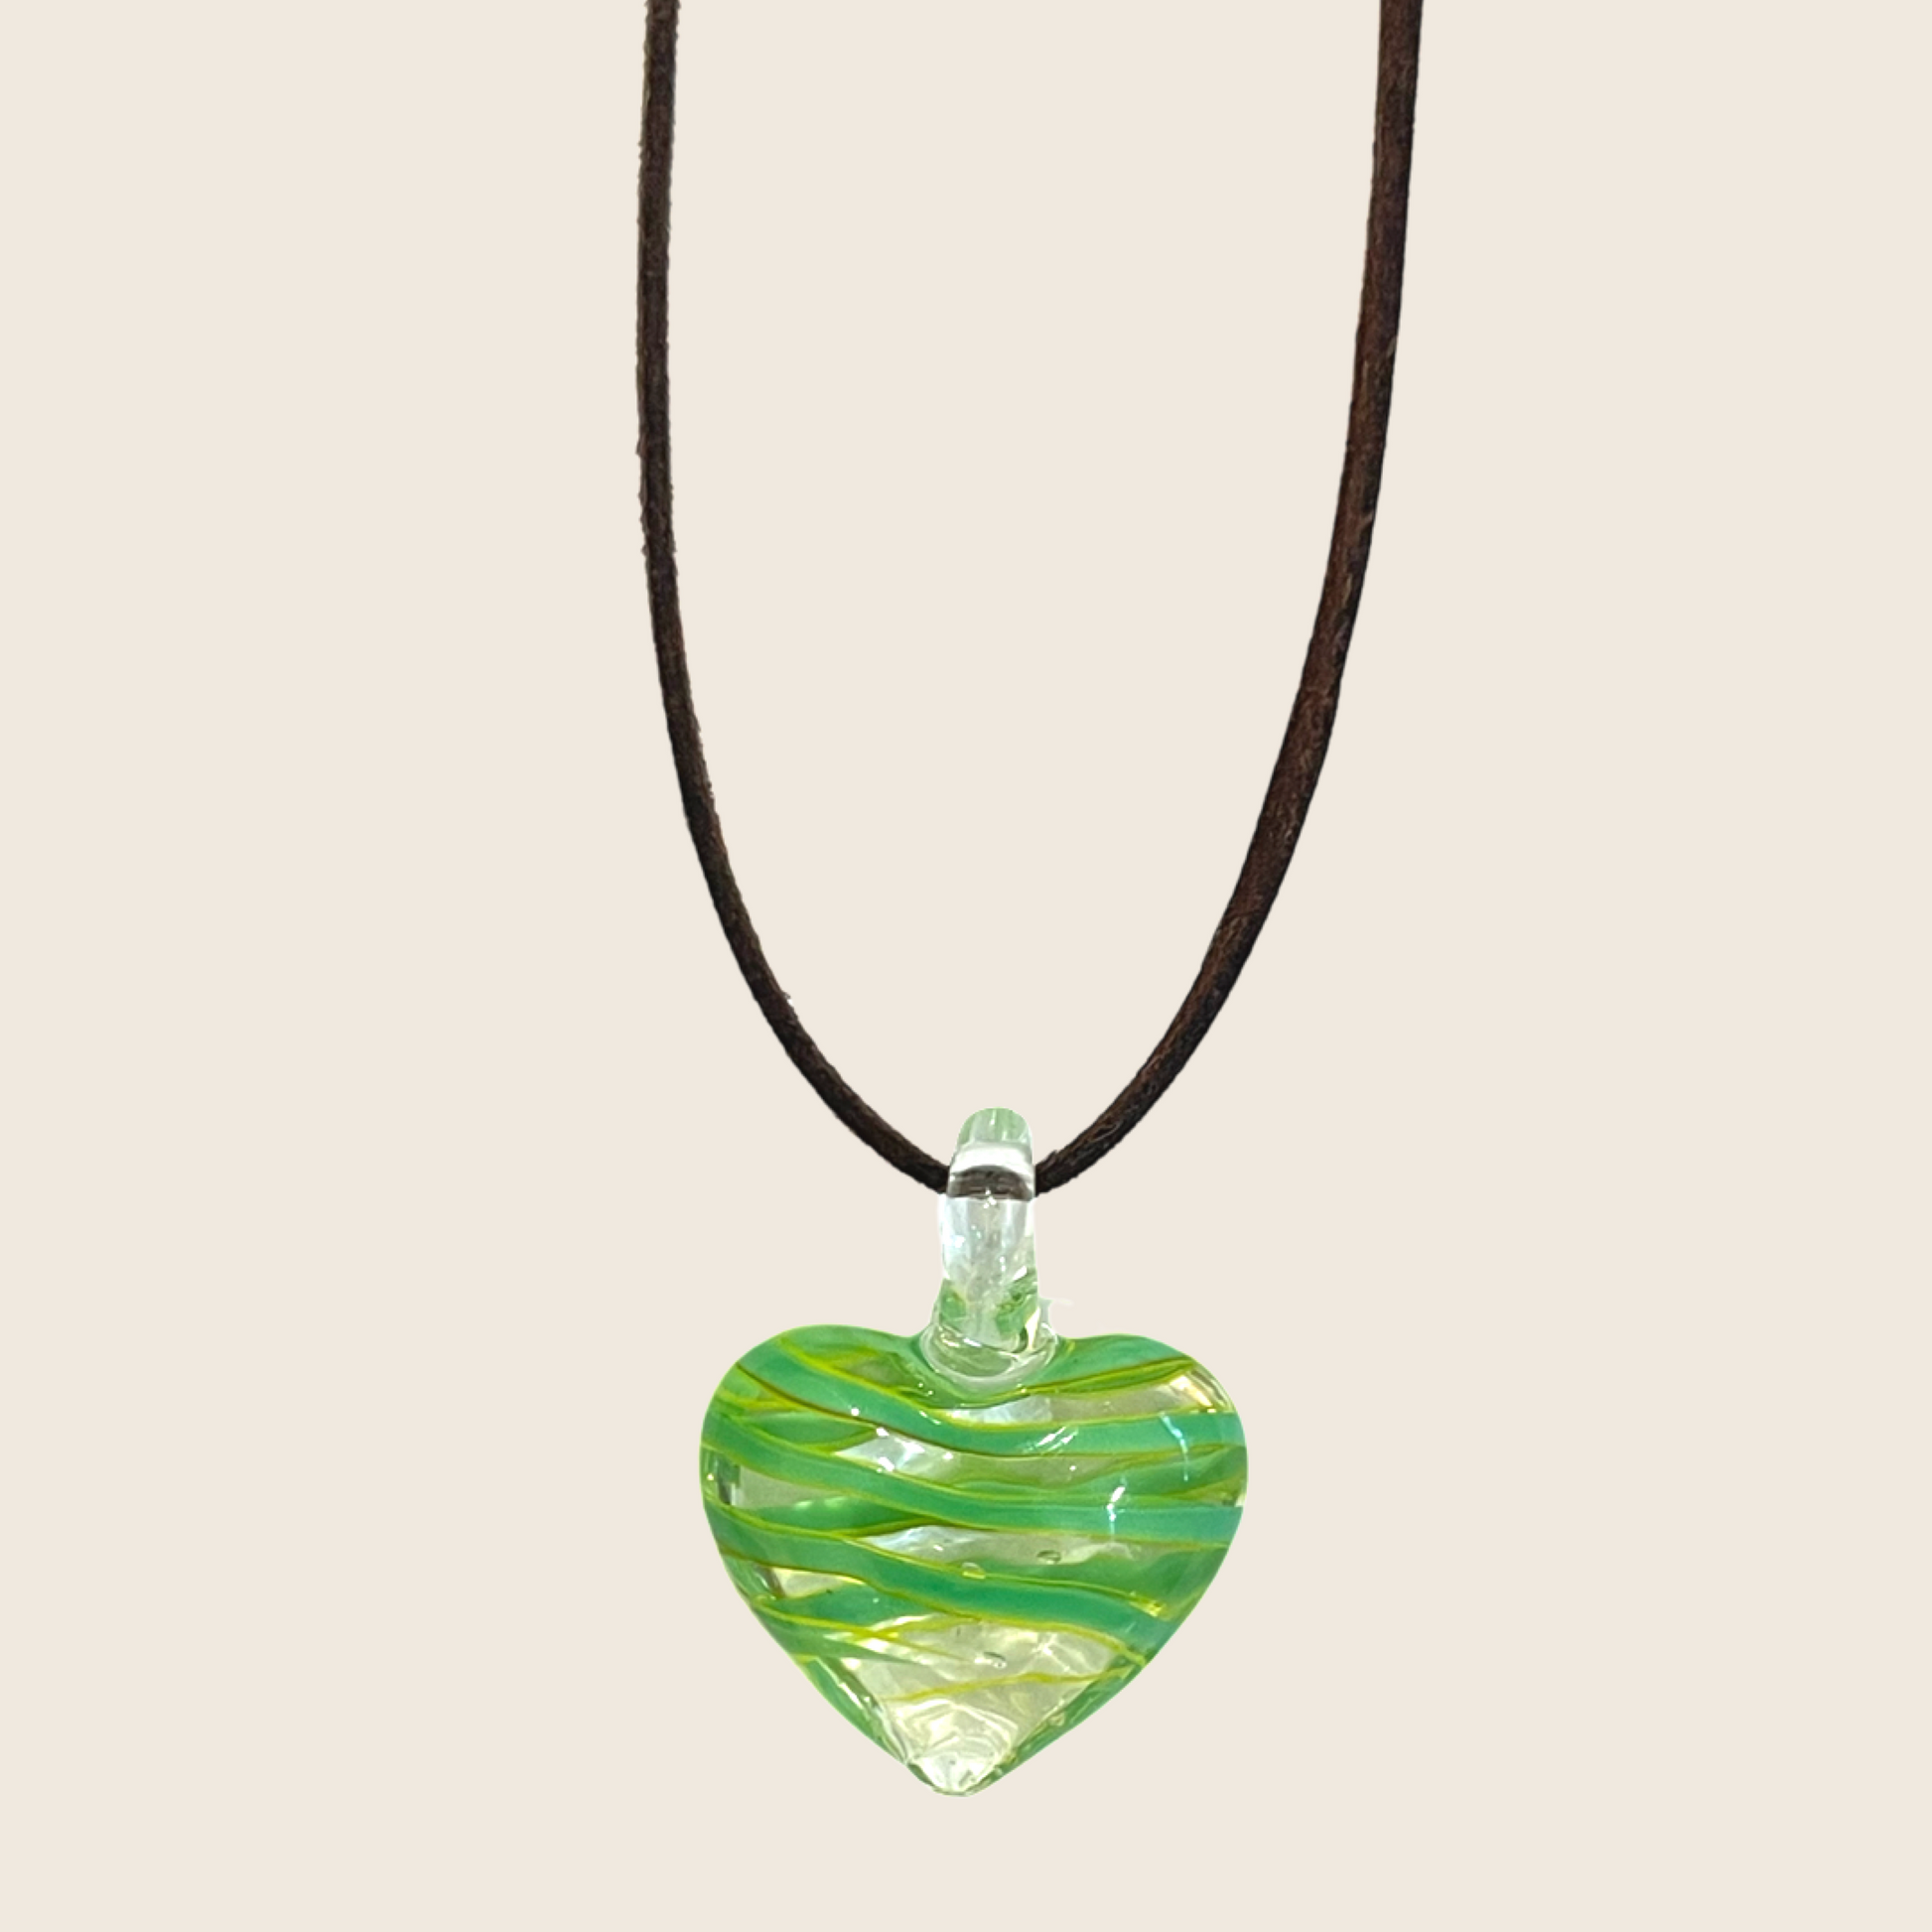 Striped Heart Glass Necklace - Lemon Lua Striped Heart Glass Necklace Lemon Lua Green / Black Lemon Lua Striped Heart Glass Necklace Striped Heart Glass Necklace